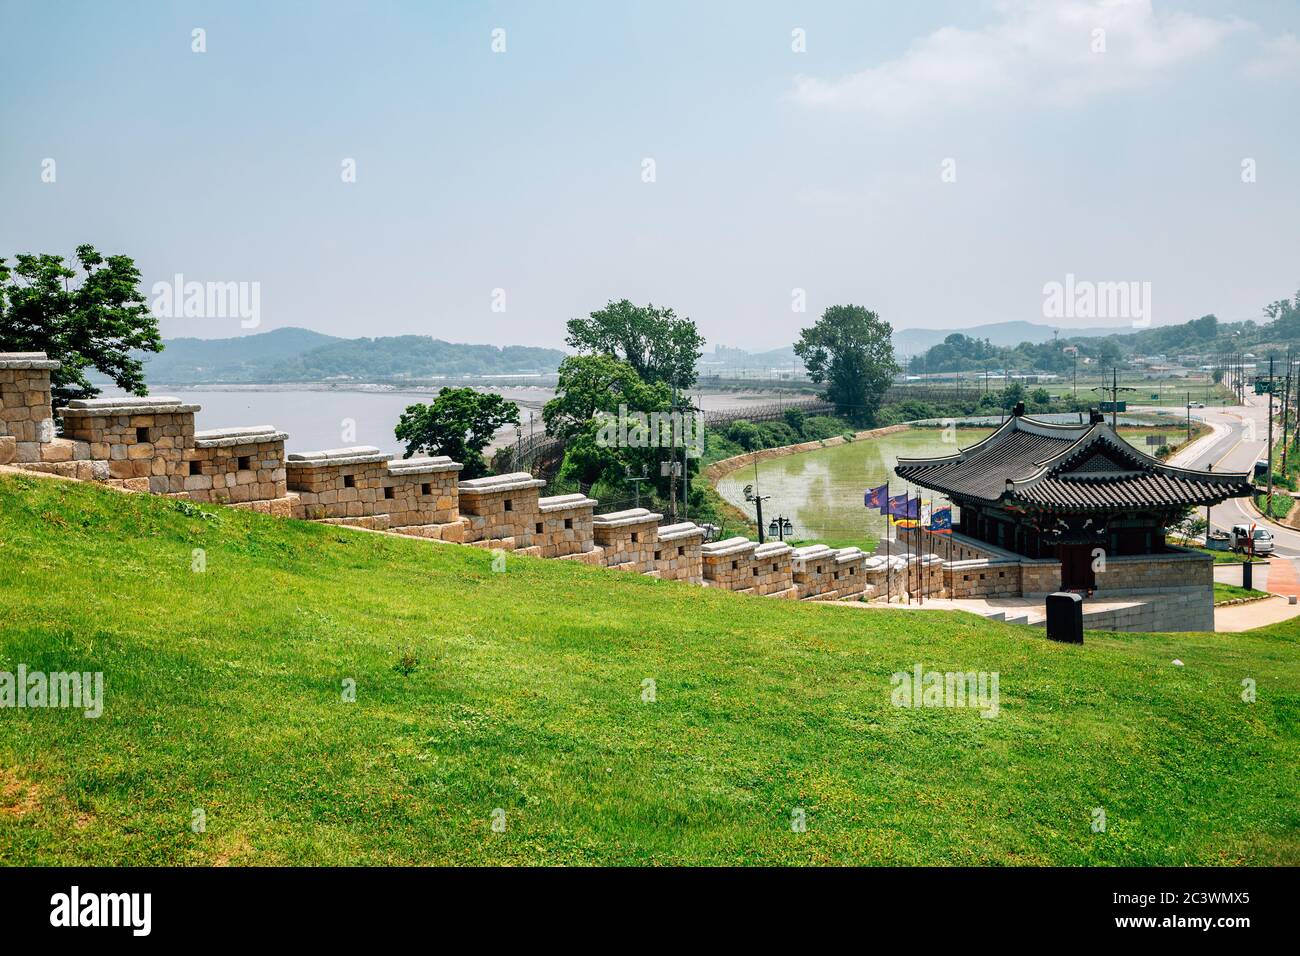 Ganghwa island Wolgotjin Fort in Incheon, Korea Stock Photo